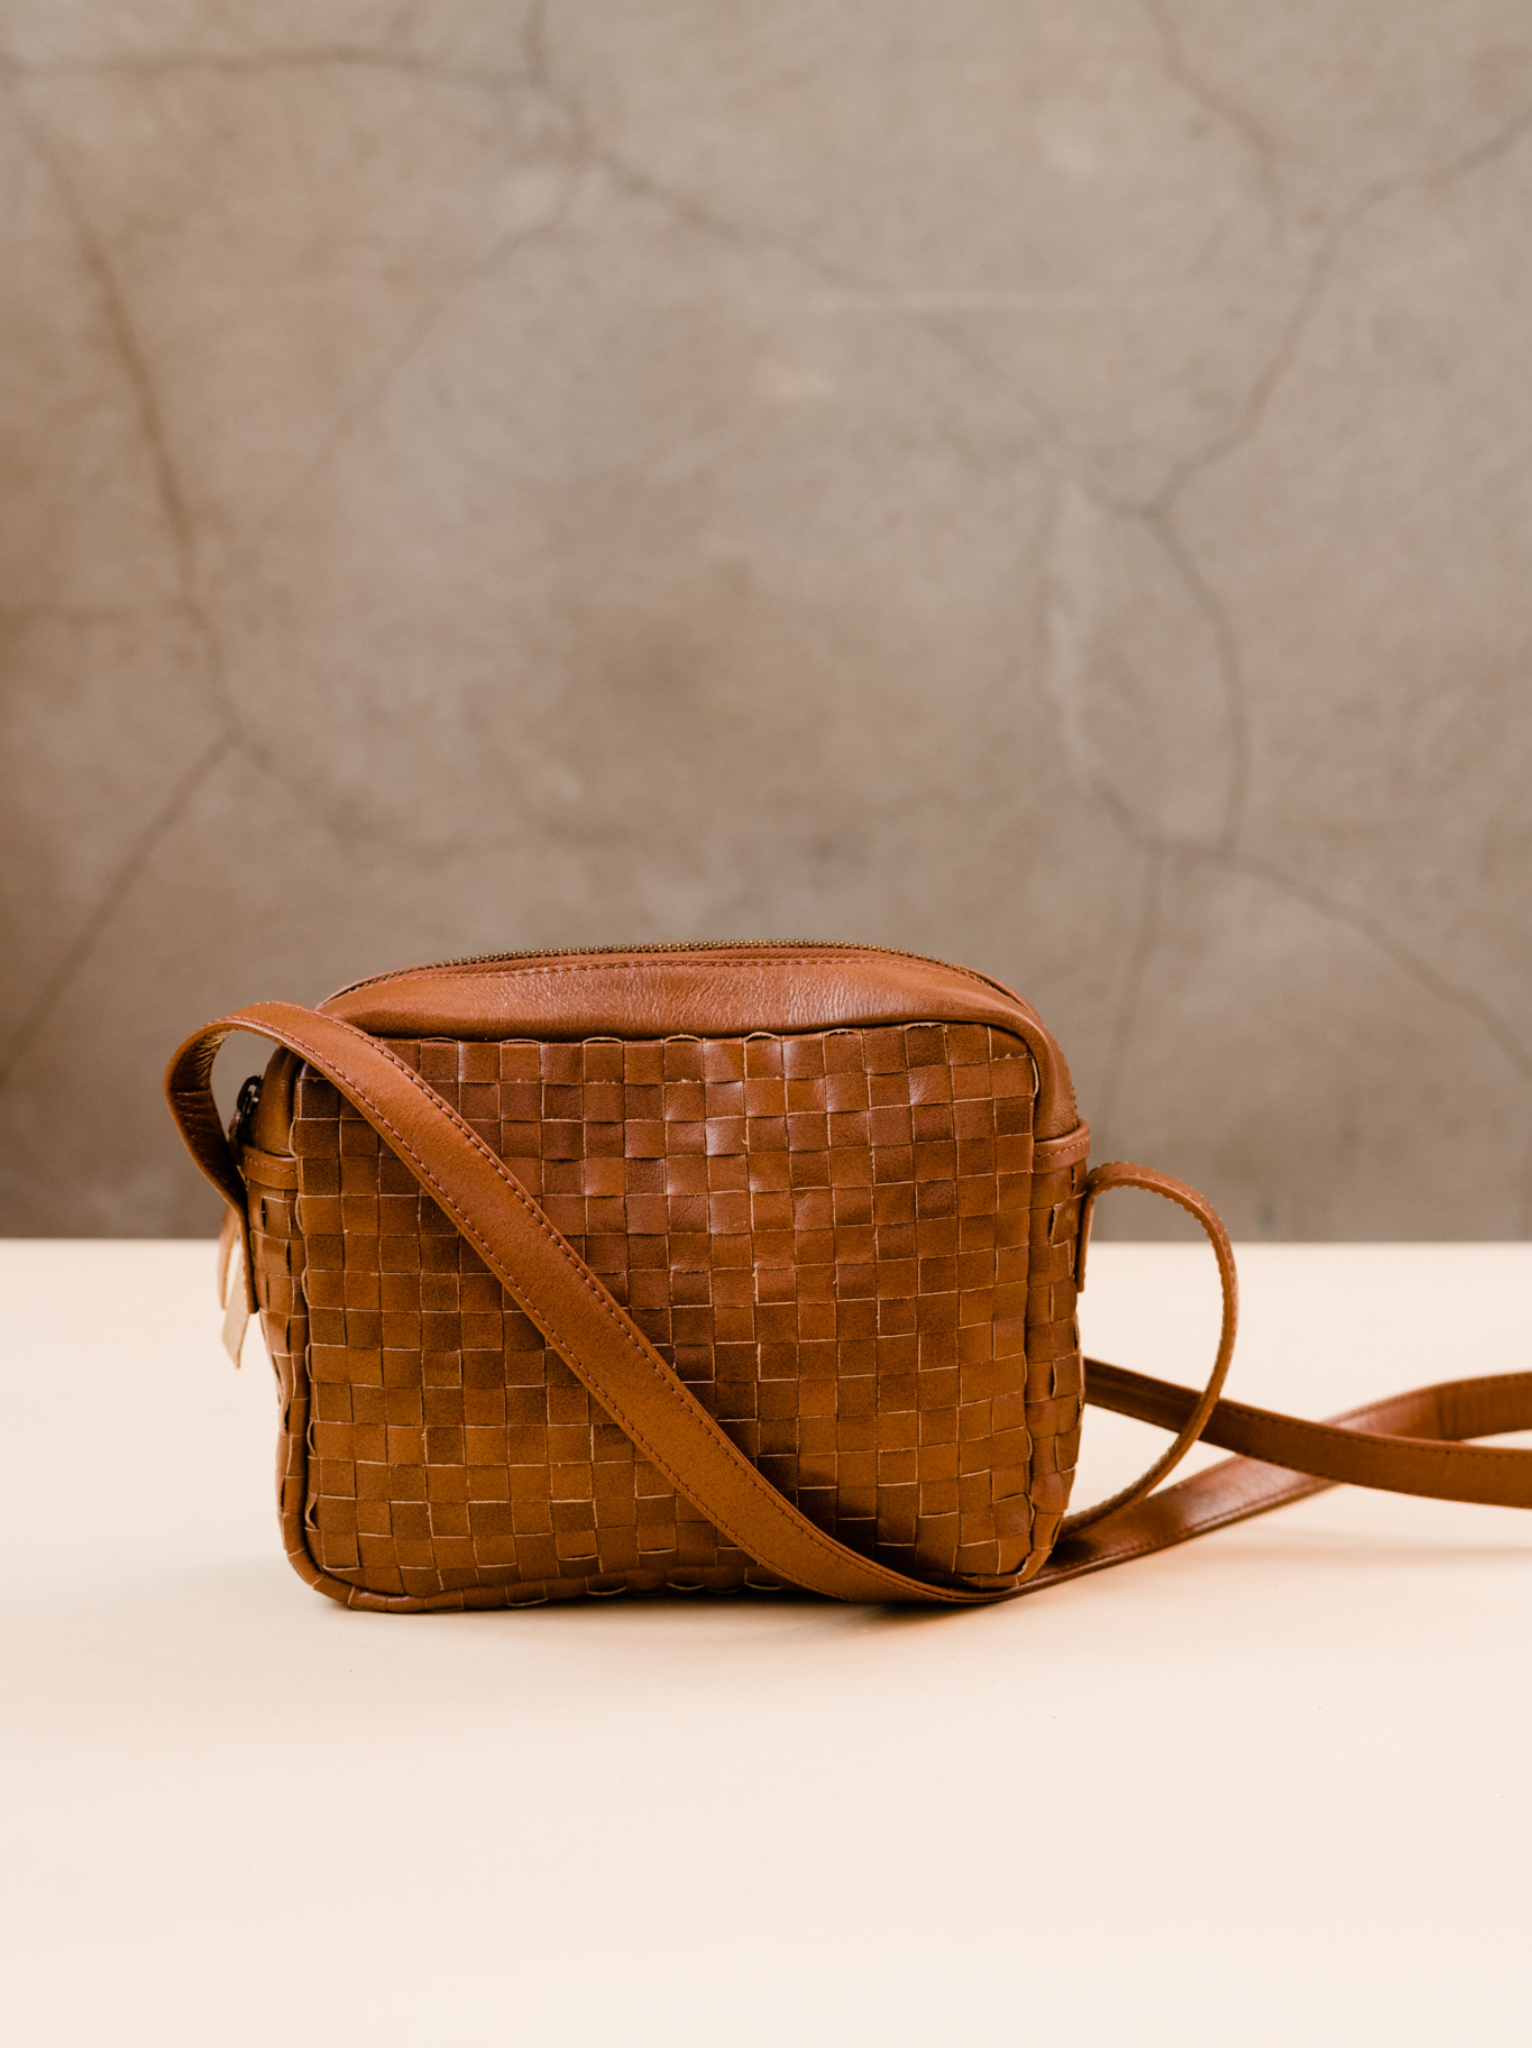 Woven Leather Cross-Body Bag